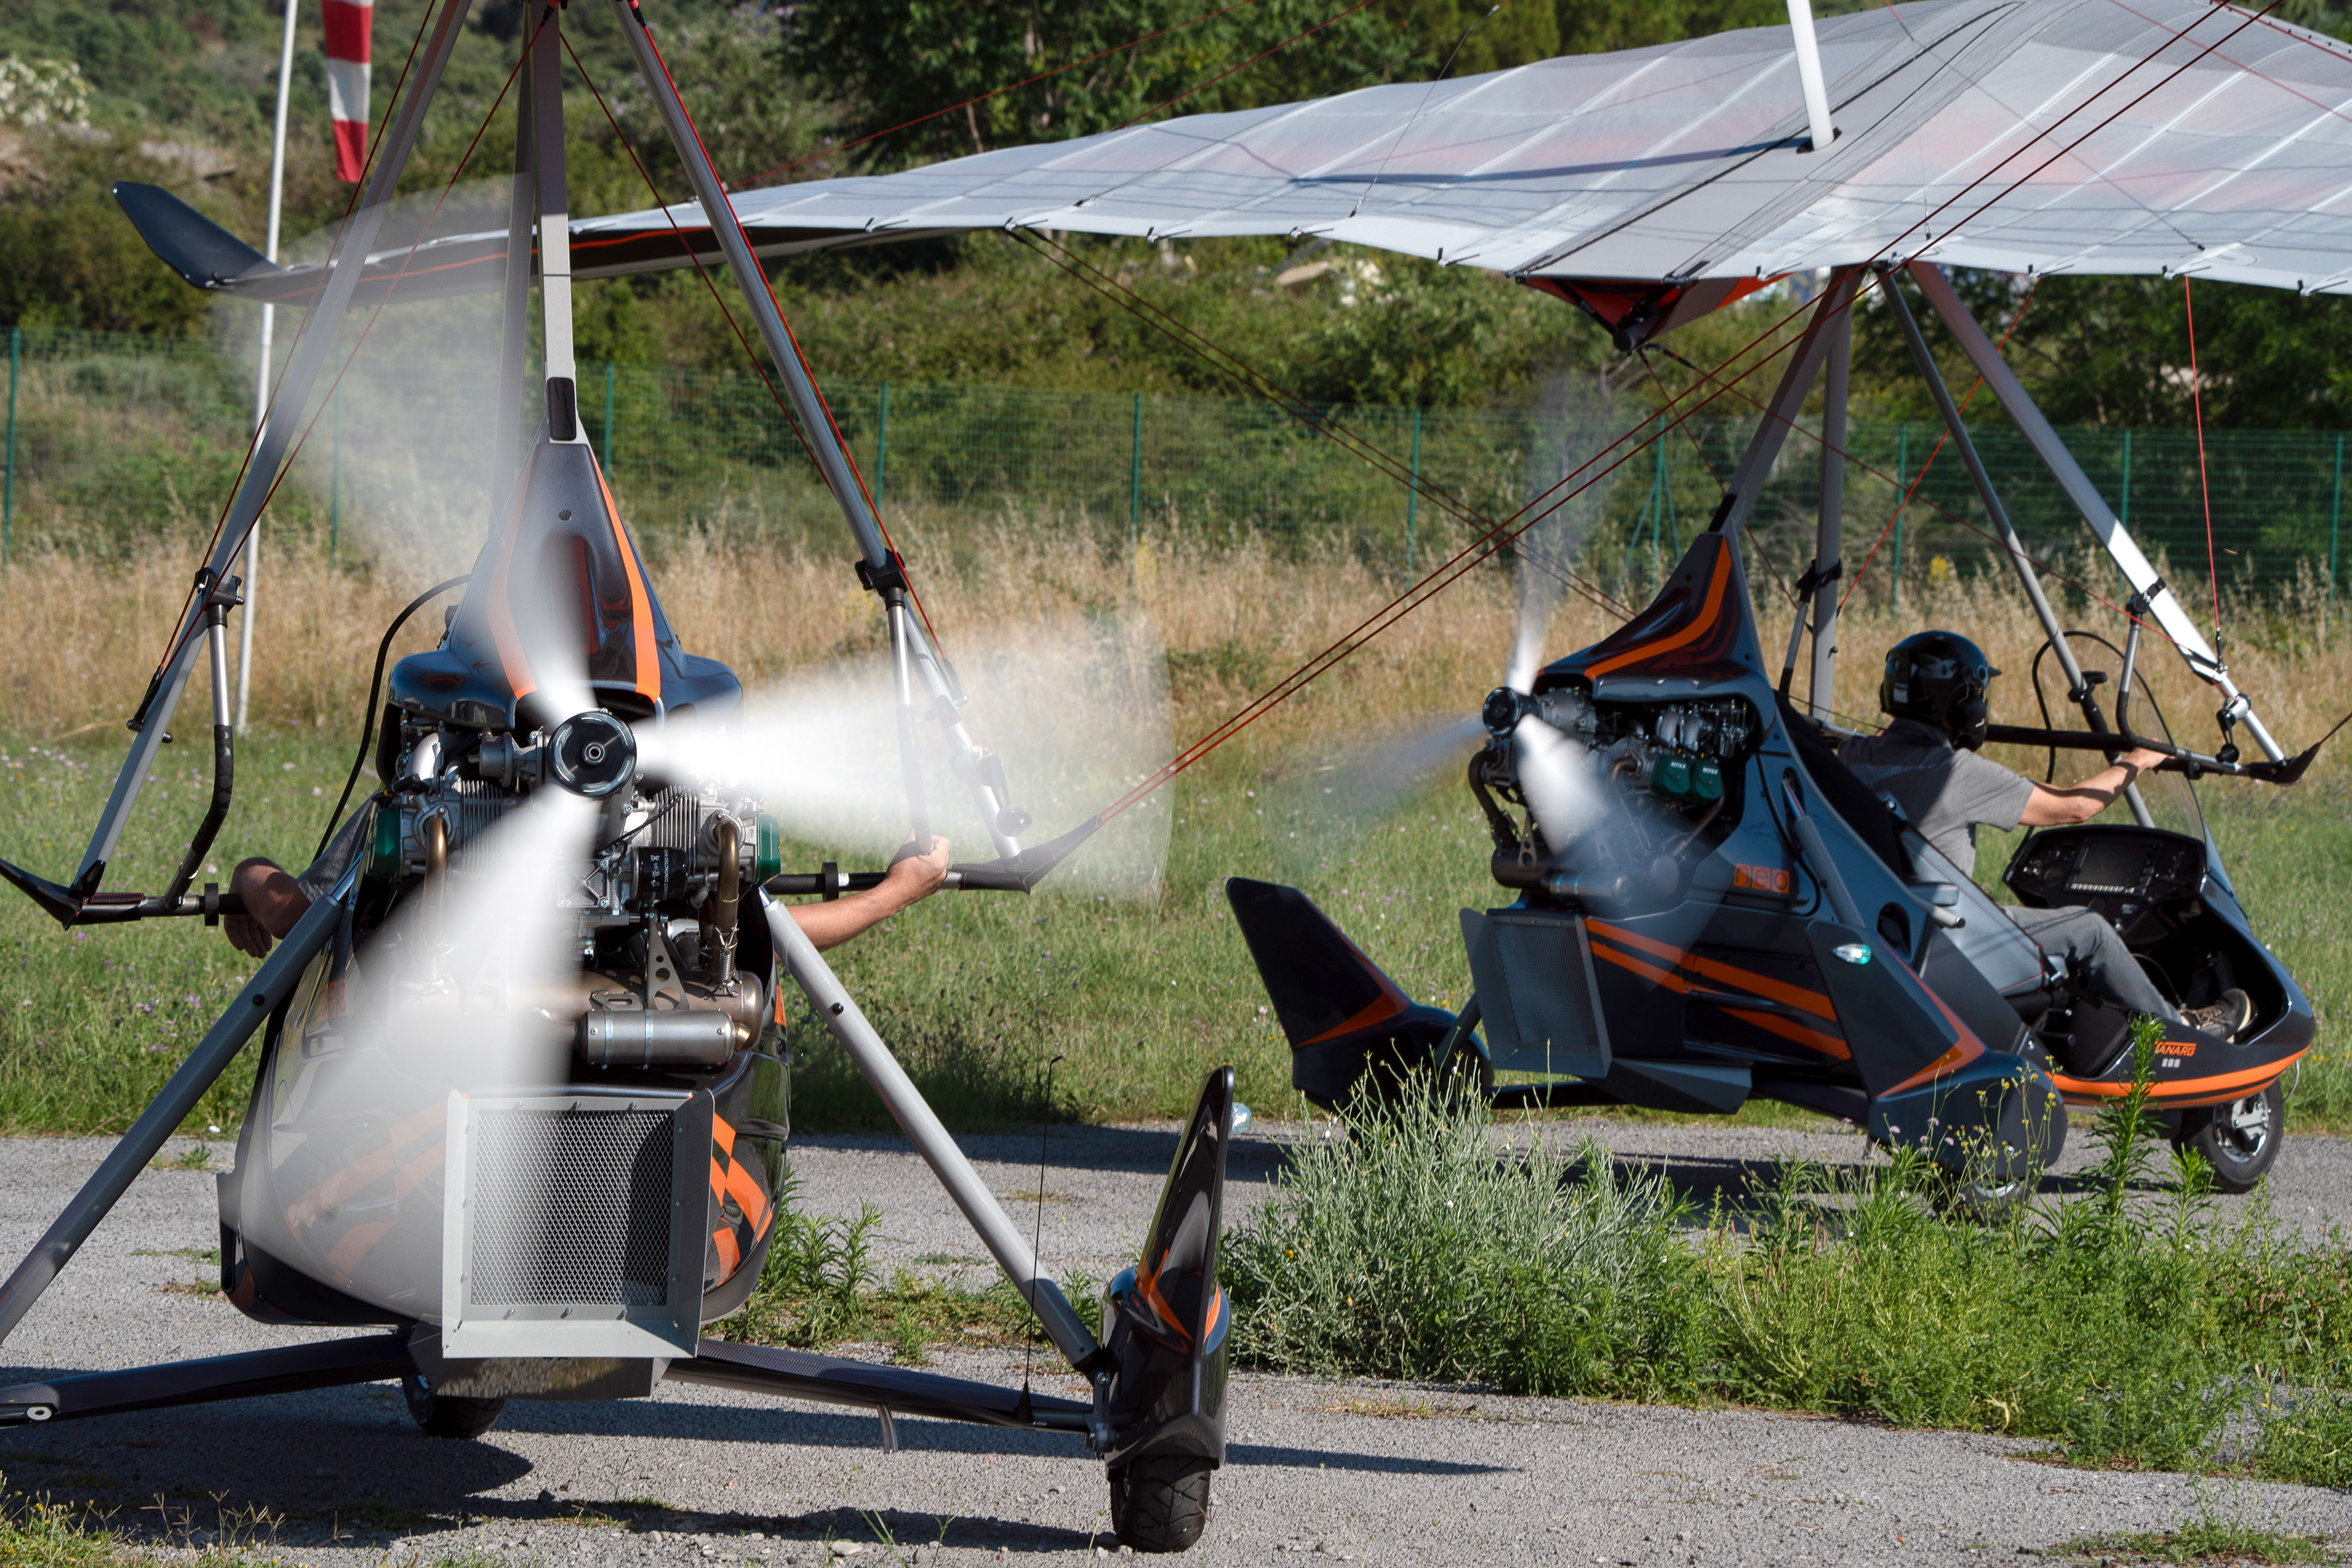 fly/lifestyle-binox2-tanarg-neo-lifestyle-ulm-pendulaire-ultralight-trike-wings.jpg